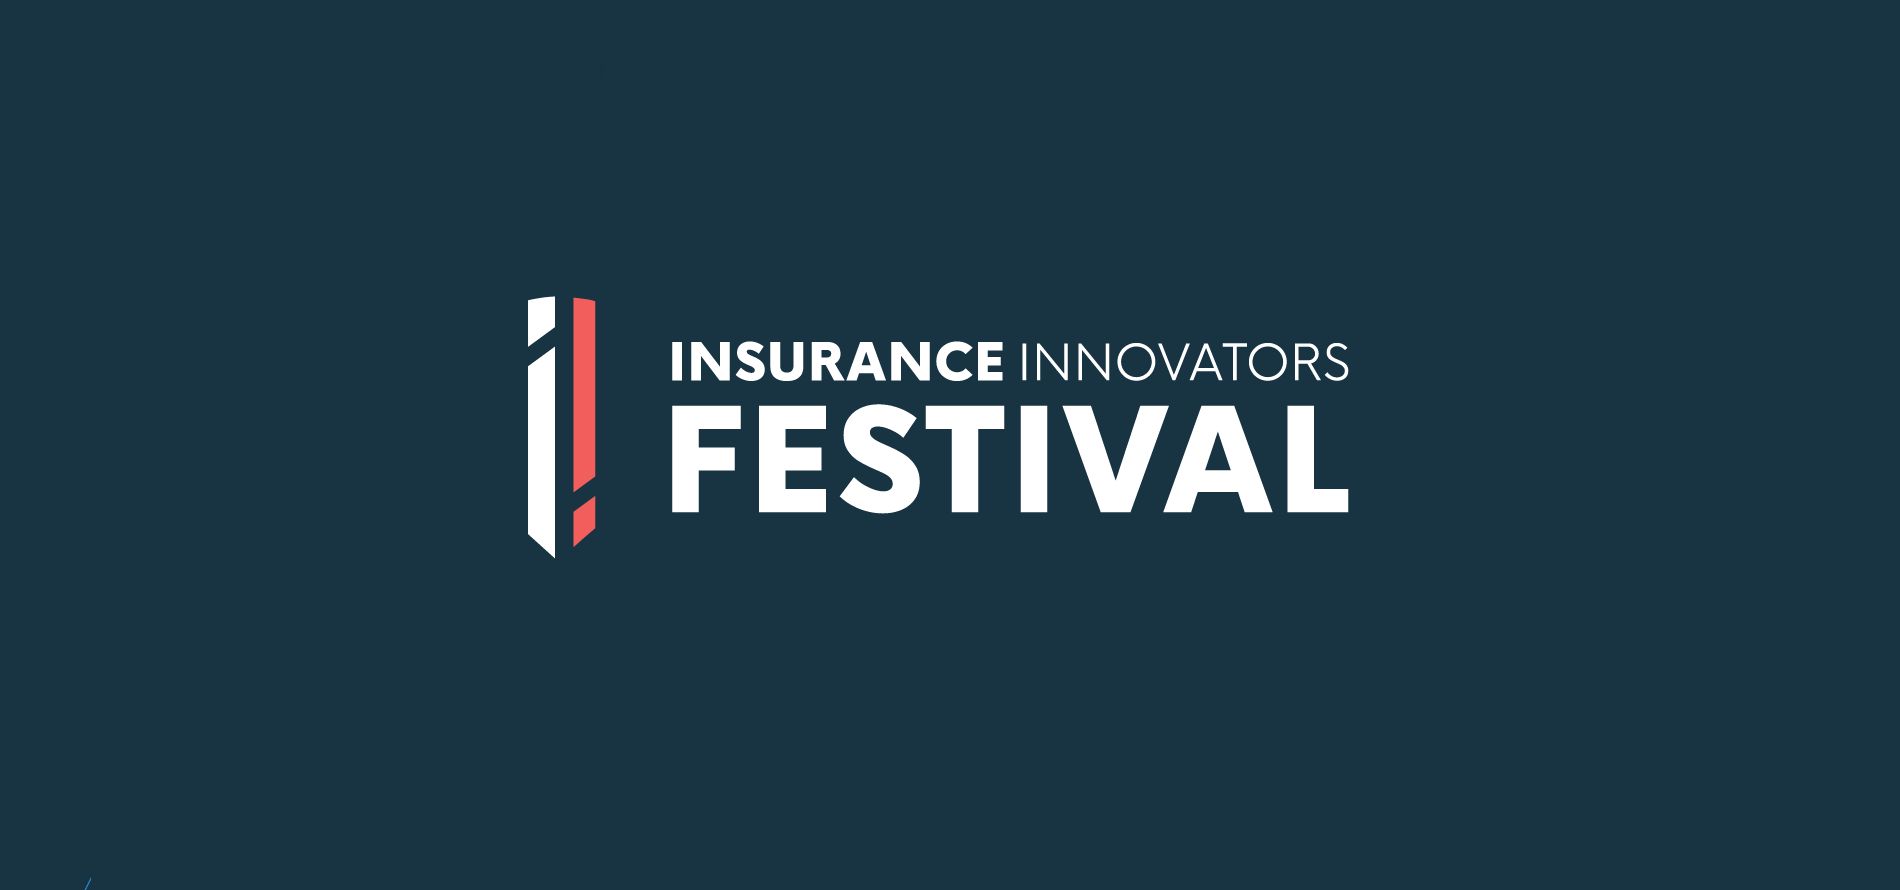 Insurance Innovators Festival 2021 | Virtual Episodes October and November | The Big Meet-Up, London